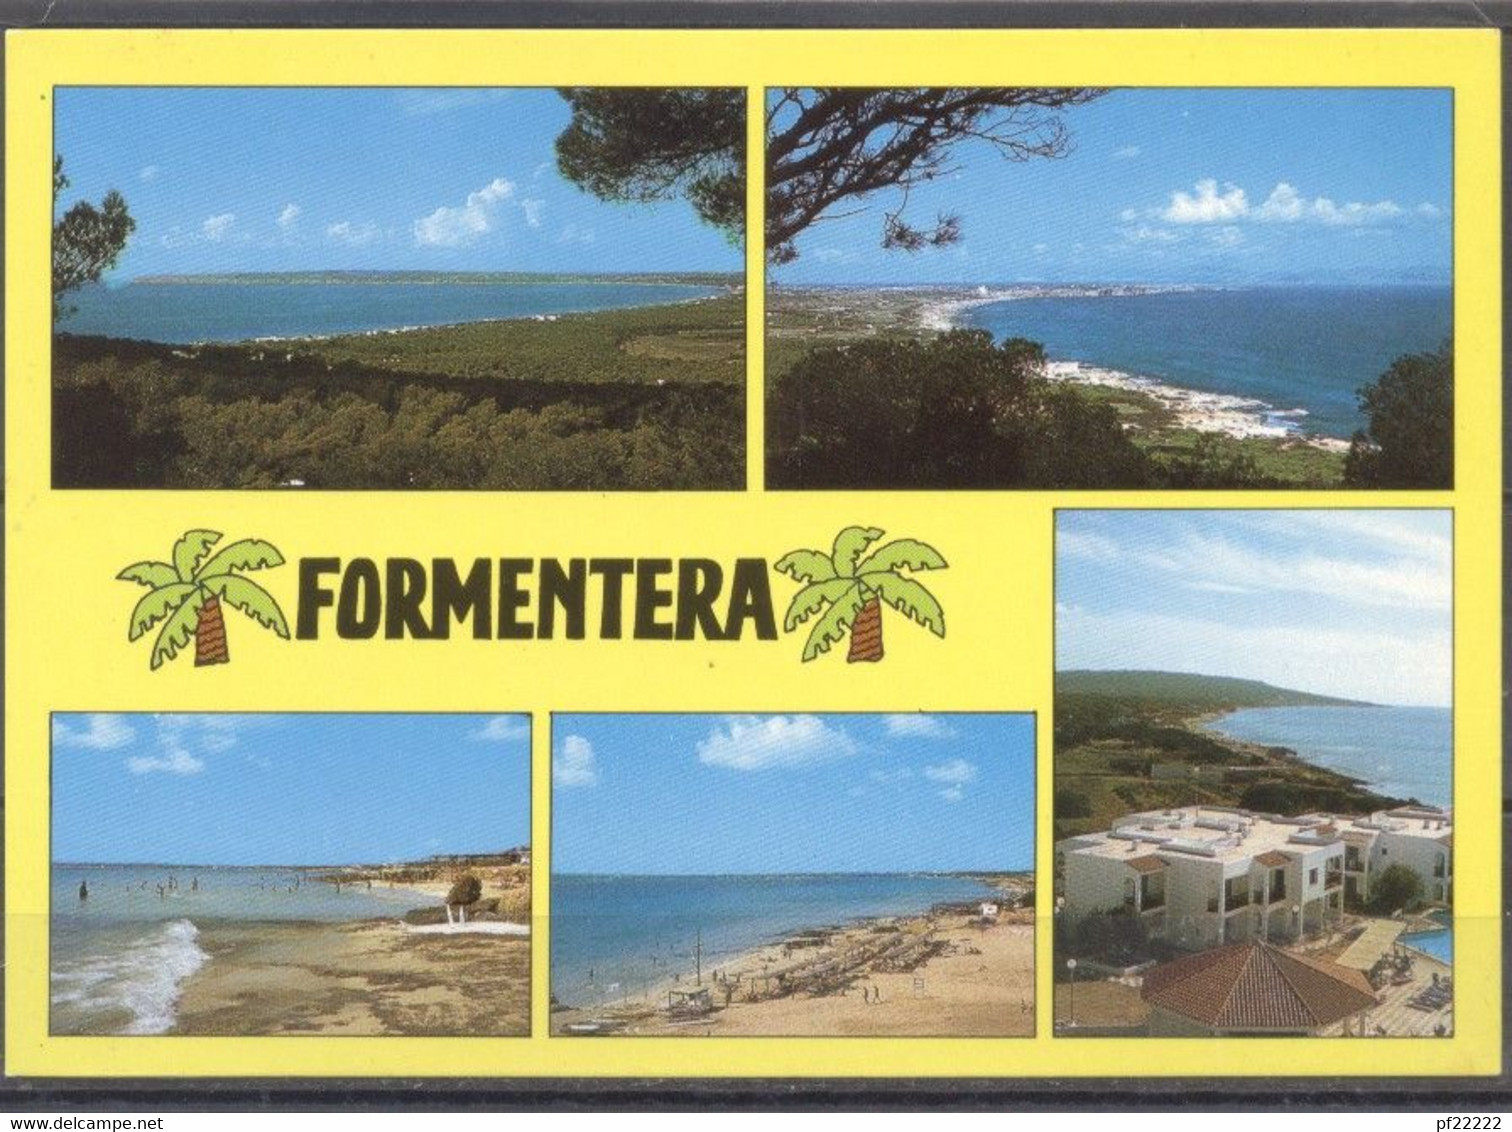 Formentera, Diversos Aspectos - Formentera